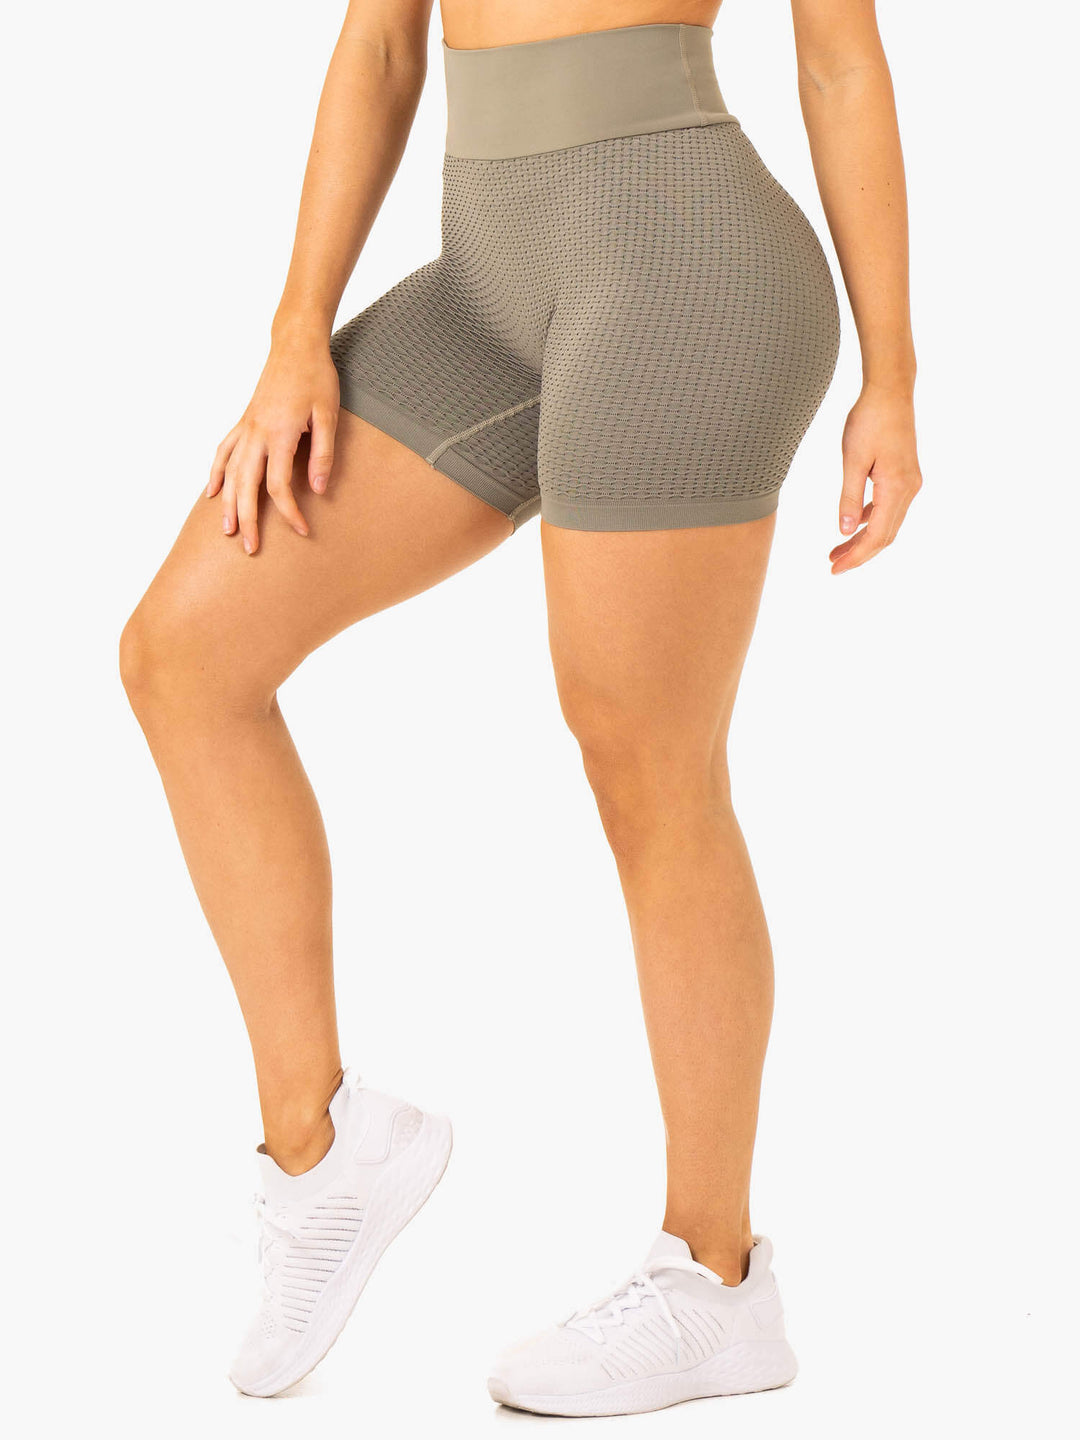 Honeycomb Scrunch Seamless Shorts - Khaki Clothing Ryderwear 